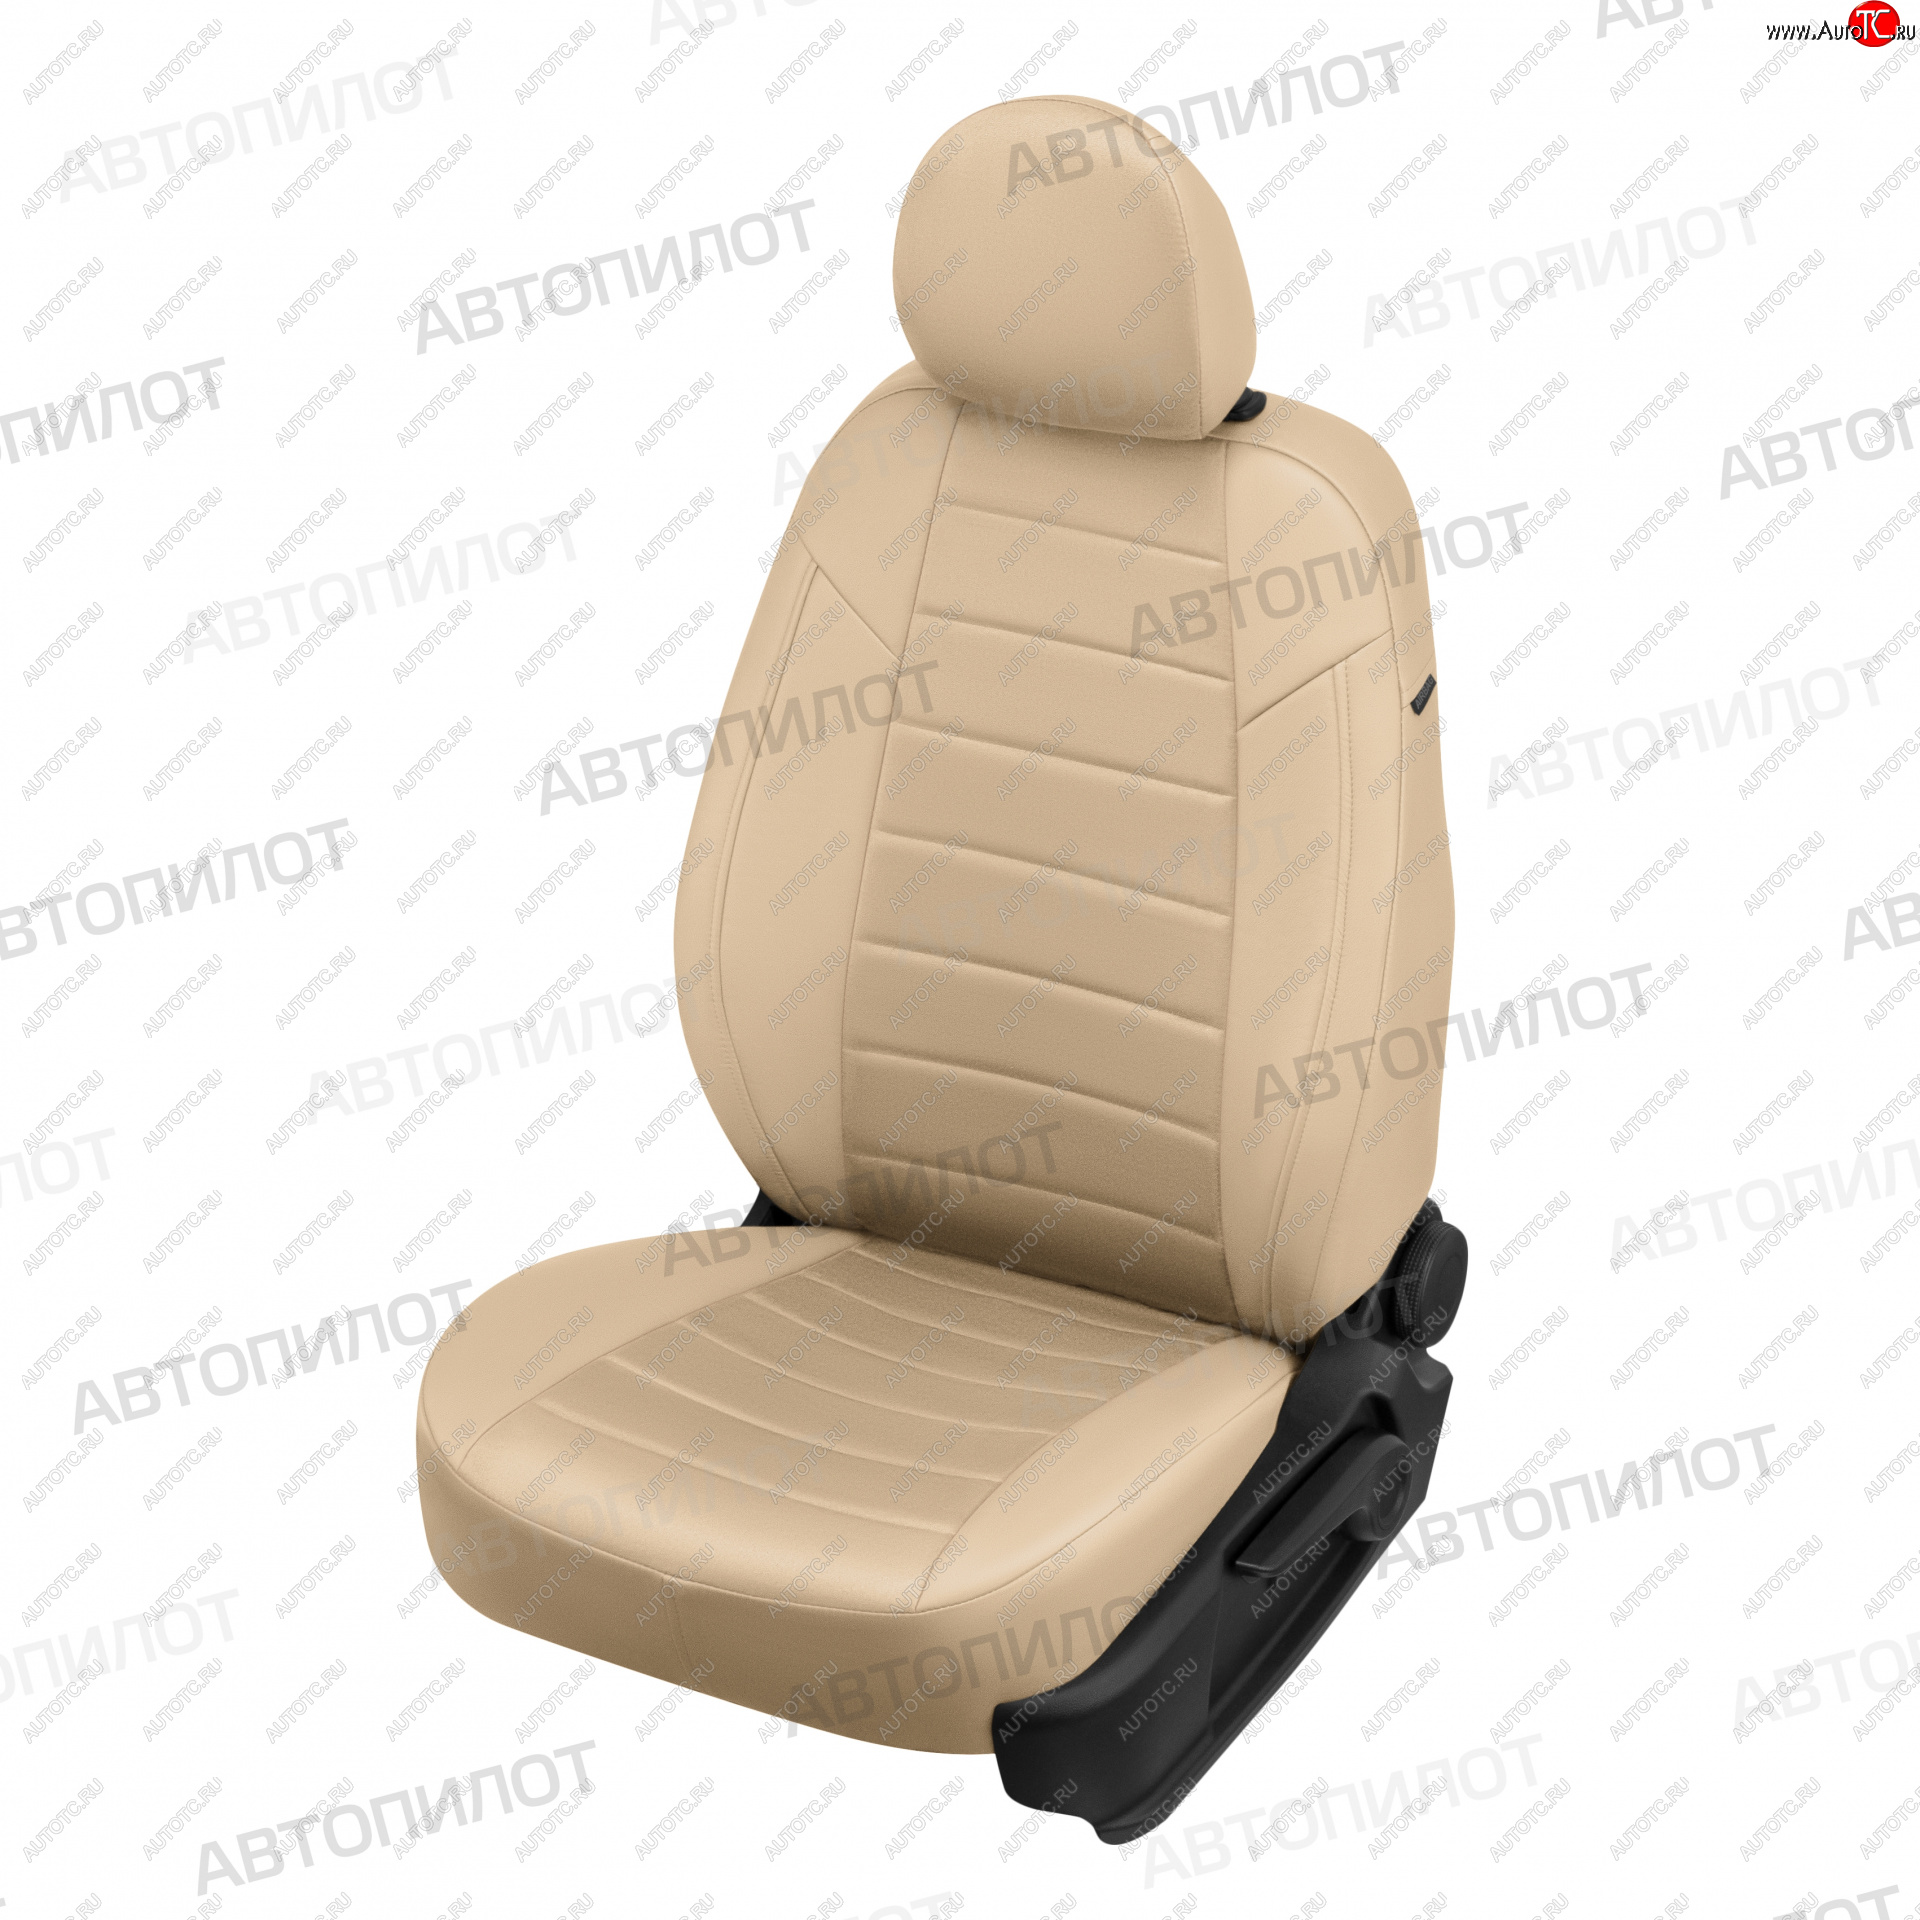 13 849 р. Чехлы сидений (экокожа/алькантара) Автопилот  Hyundai i20  1 PB (2008-2015) (бежевый)